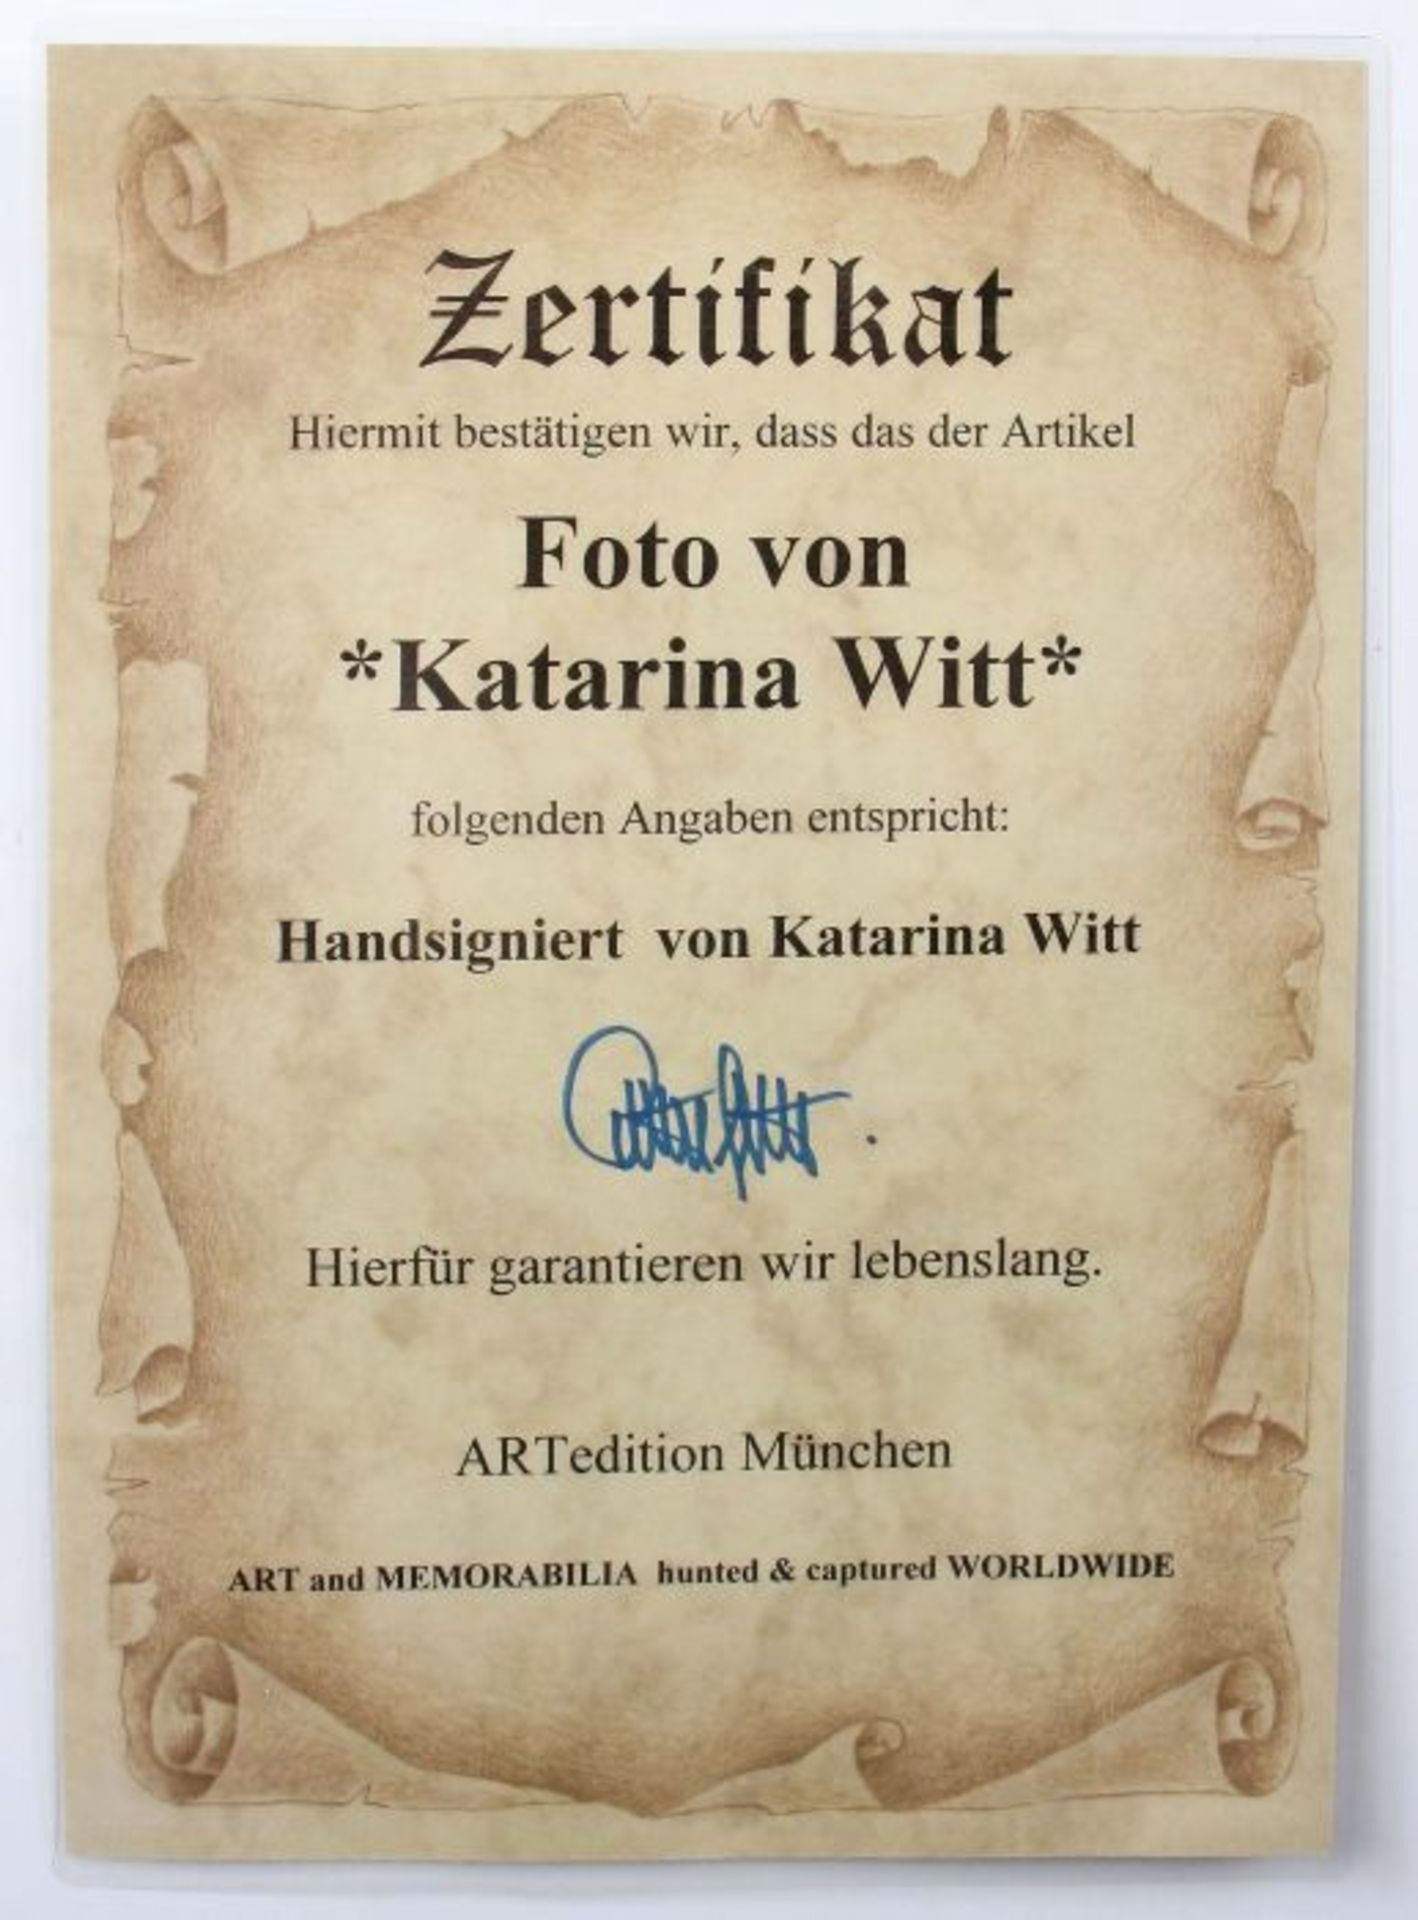 Witt, Katarina Playboy 12/98 und digitaler Farbfotoabzug "Katarina Witt unter Wasserfall", der Abzug - Bild 3 aus 3